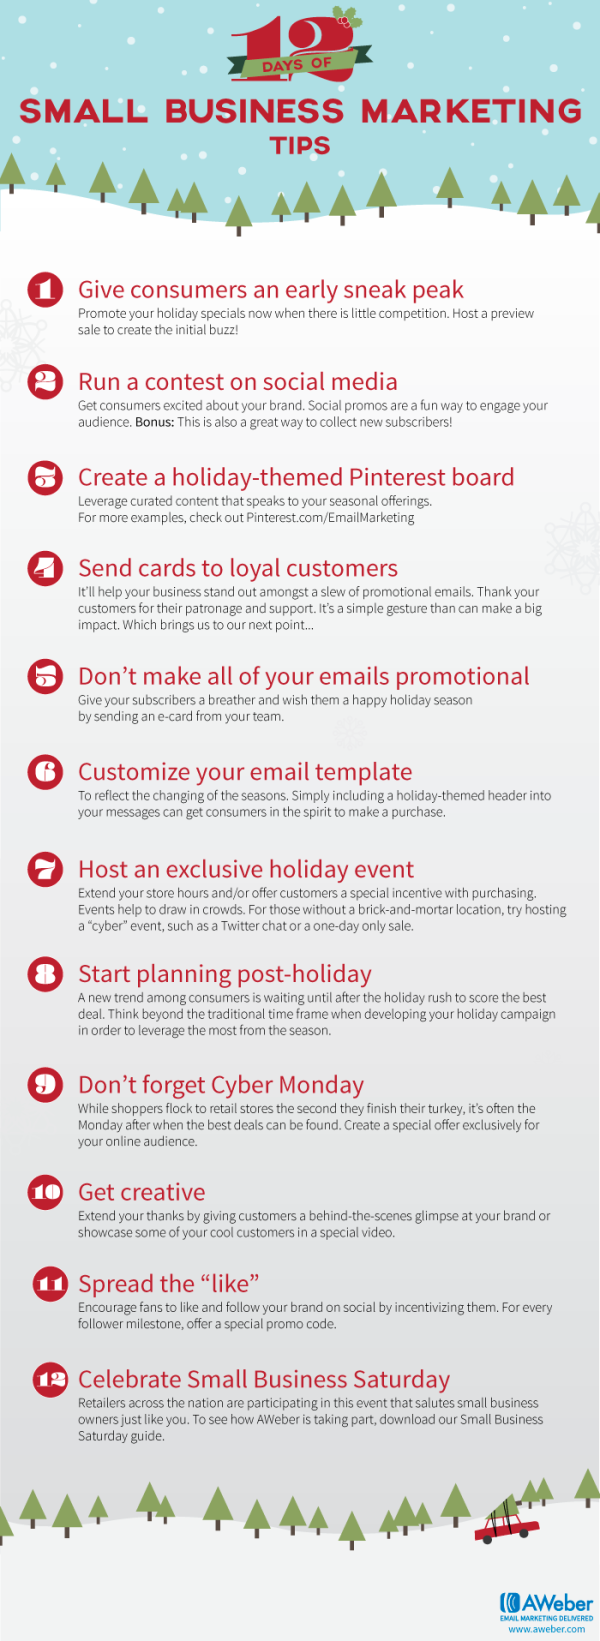 holiday marketing tips